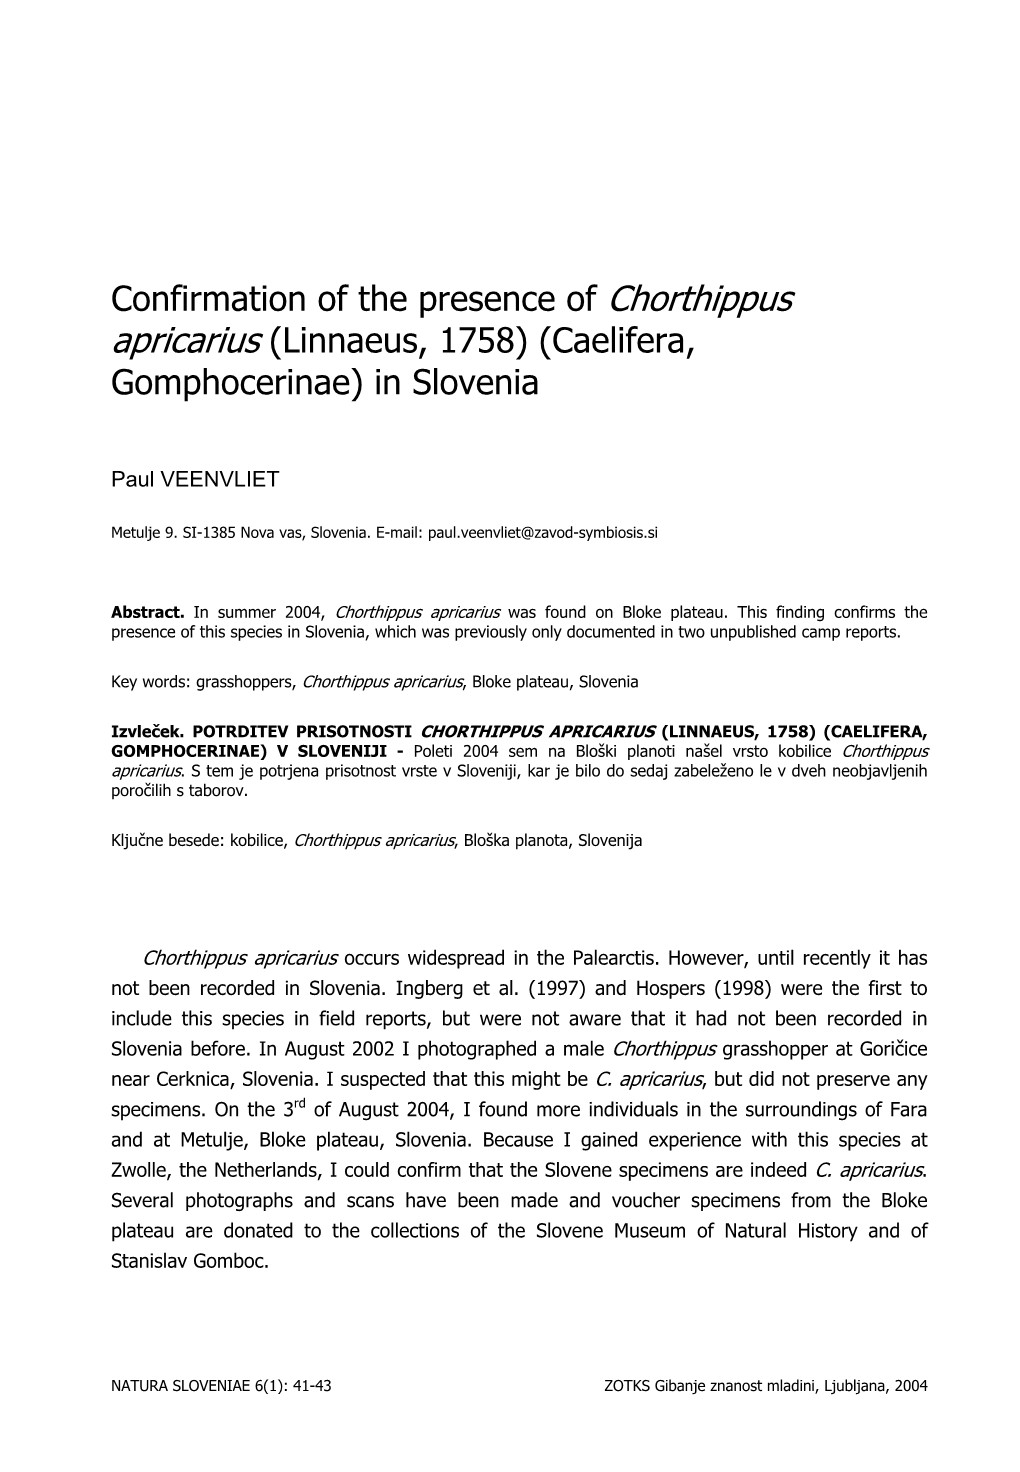 Confirmation of the Presence of Chorthippus Apricarius (Linnaeus, 1758) (Caelifera, Gomphocerinae) in Slovenia